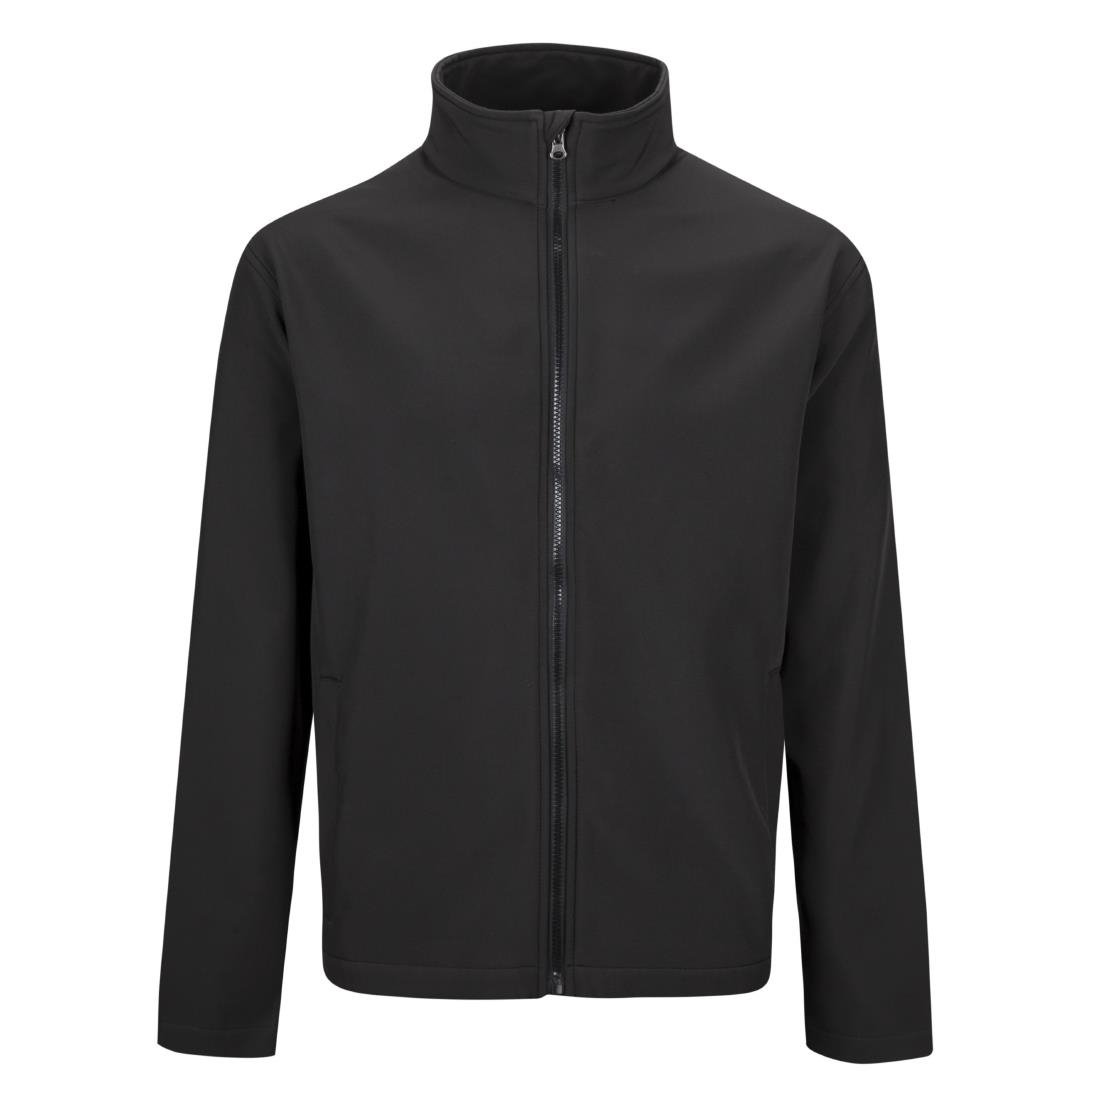 BA109-XL Portwest Softshell Two Layer Jacket Black Size XL